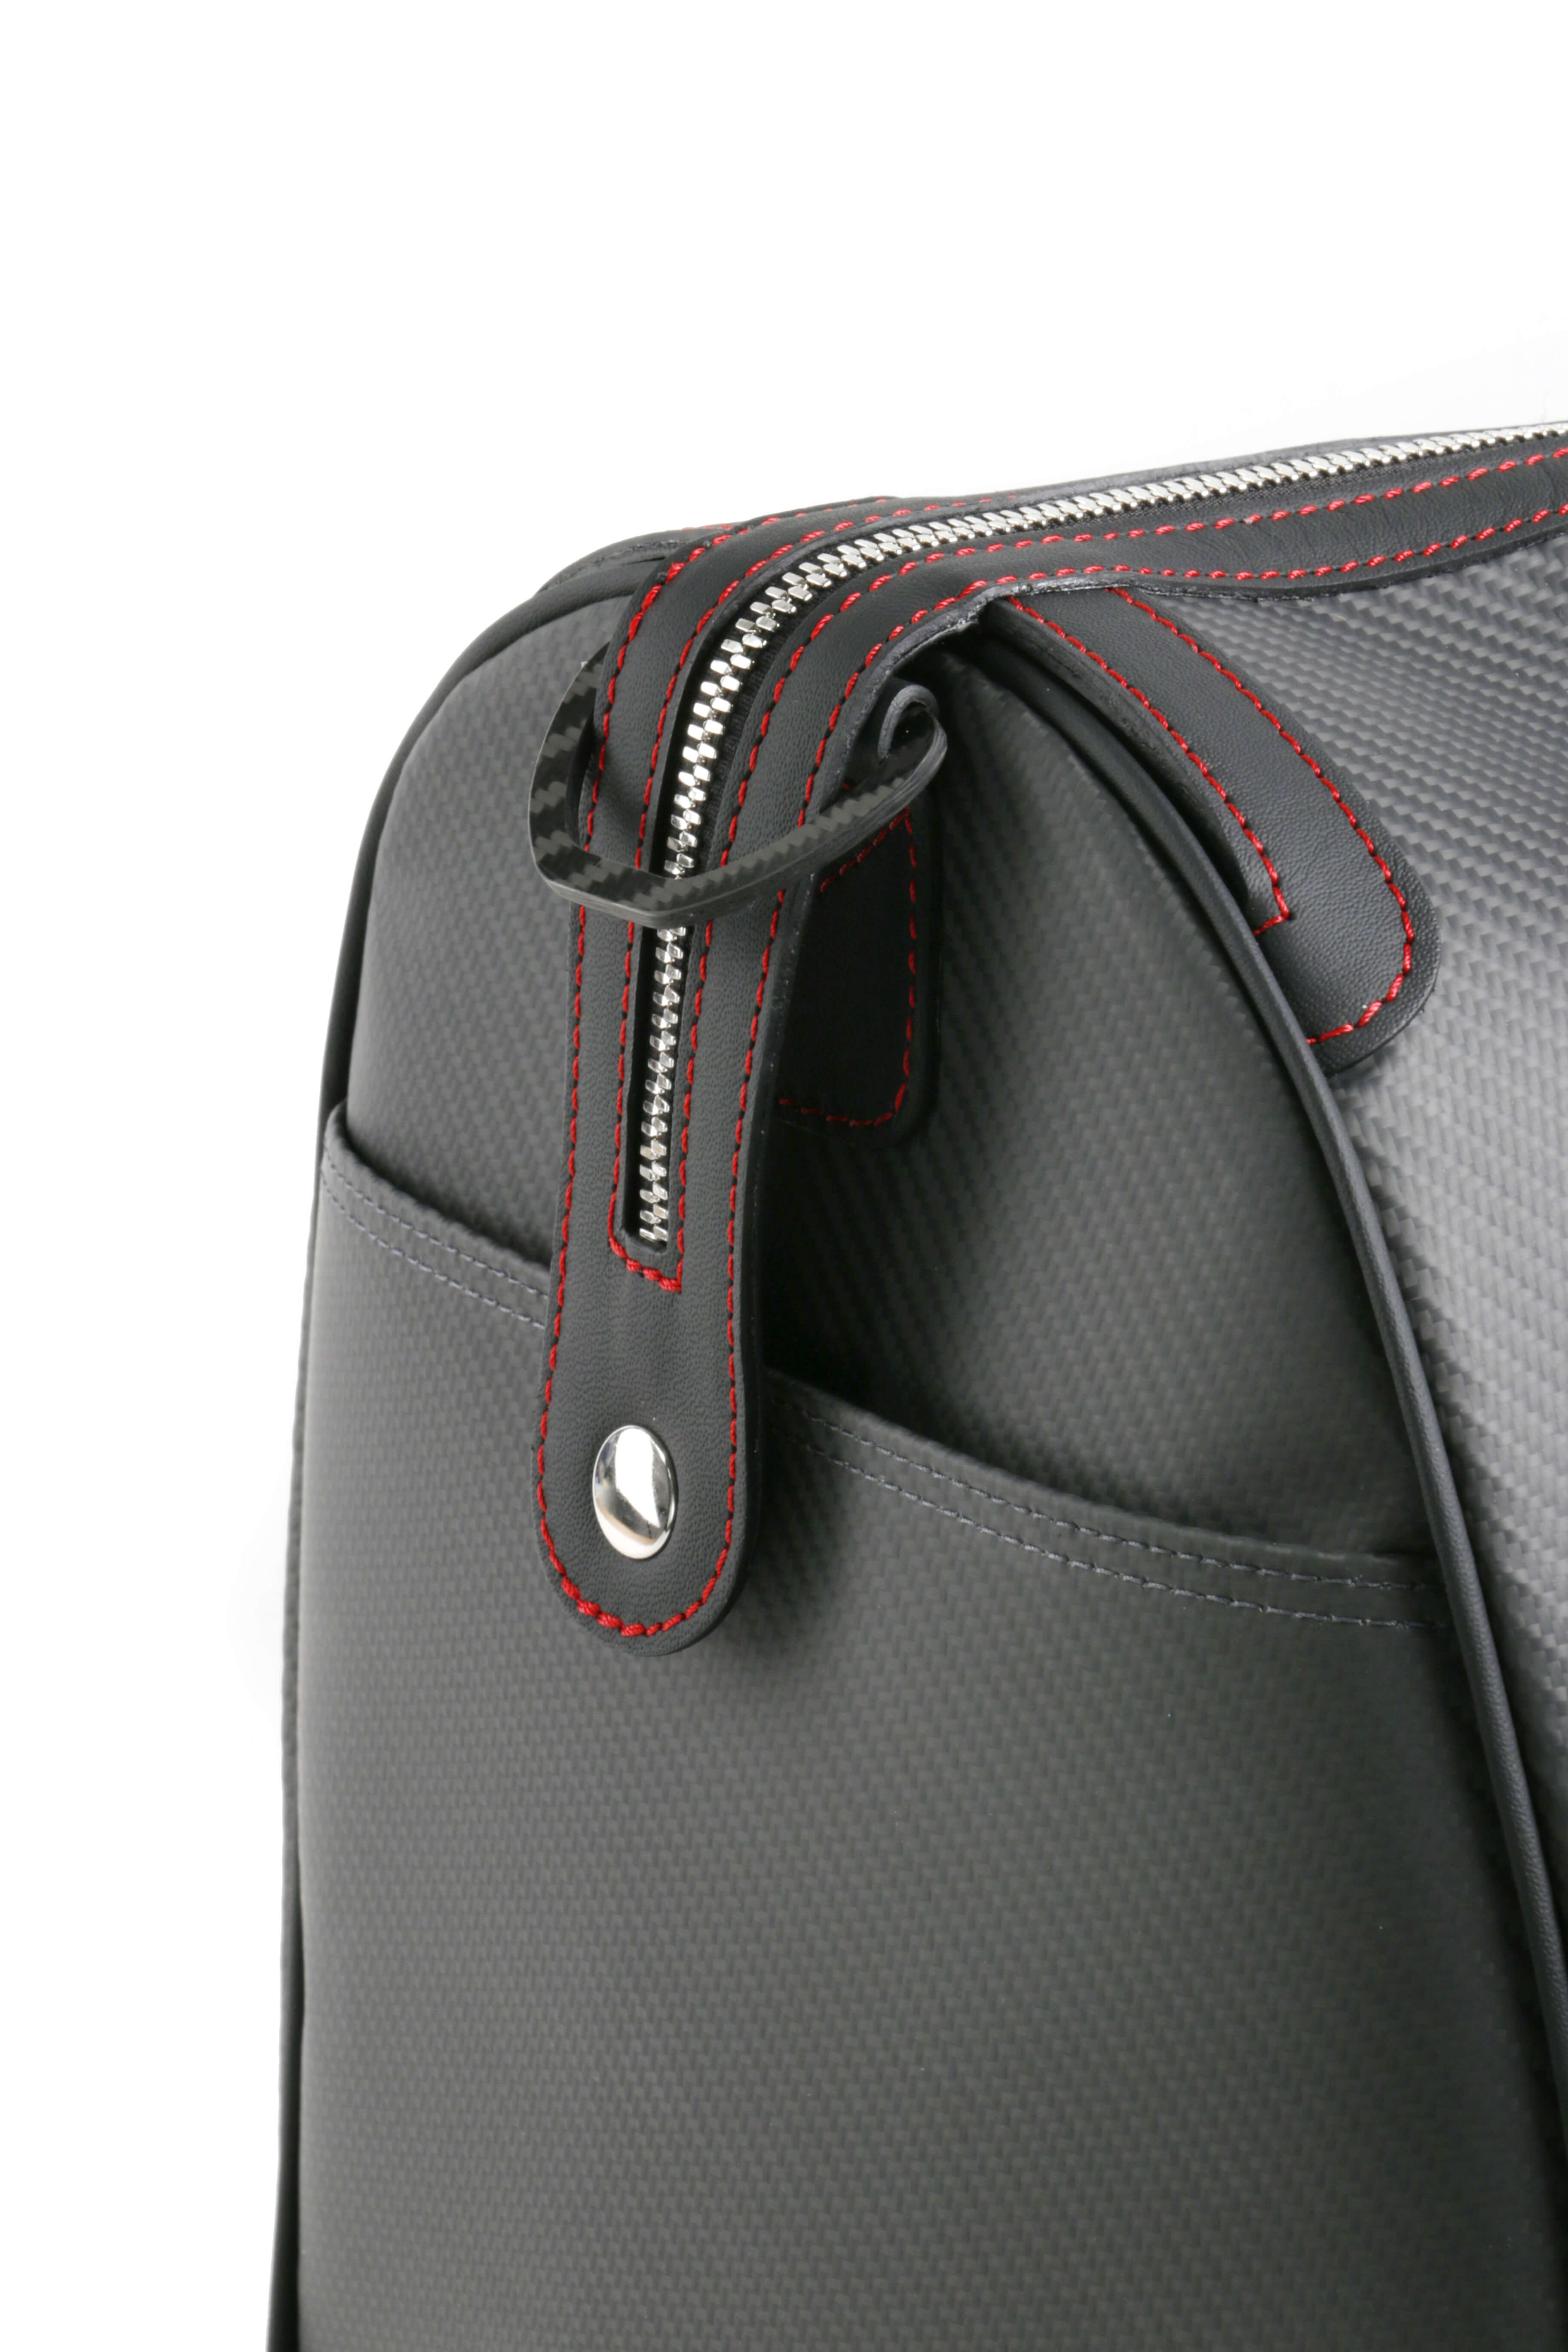 Matrik Soft Carbon Fiber Duffle Bag, Red Stitching